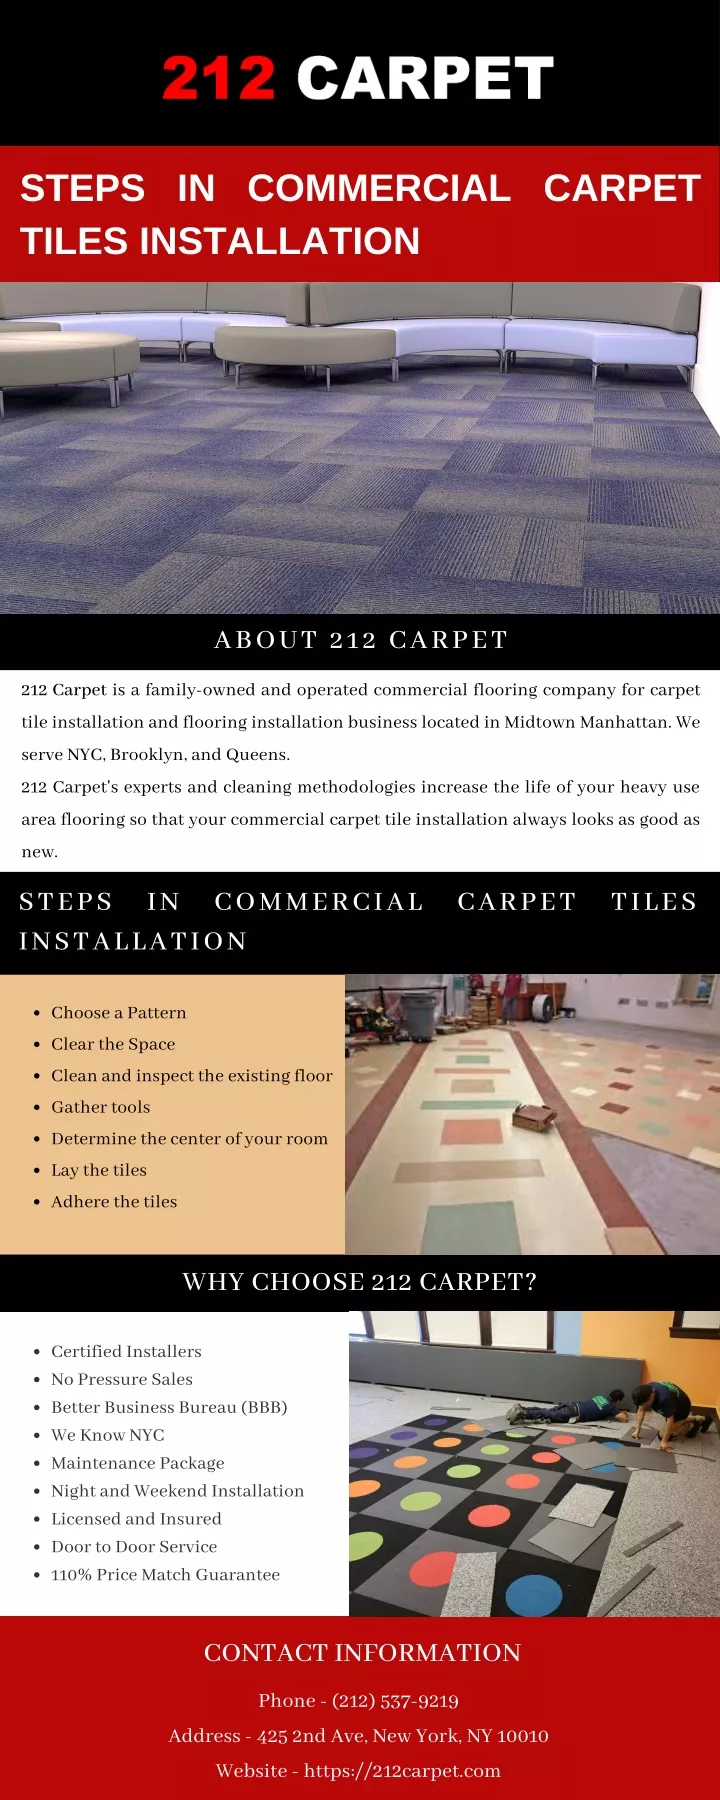 steps in commercial carpet tiles installation